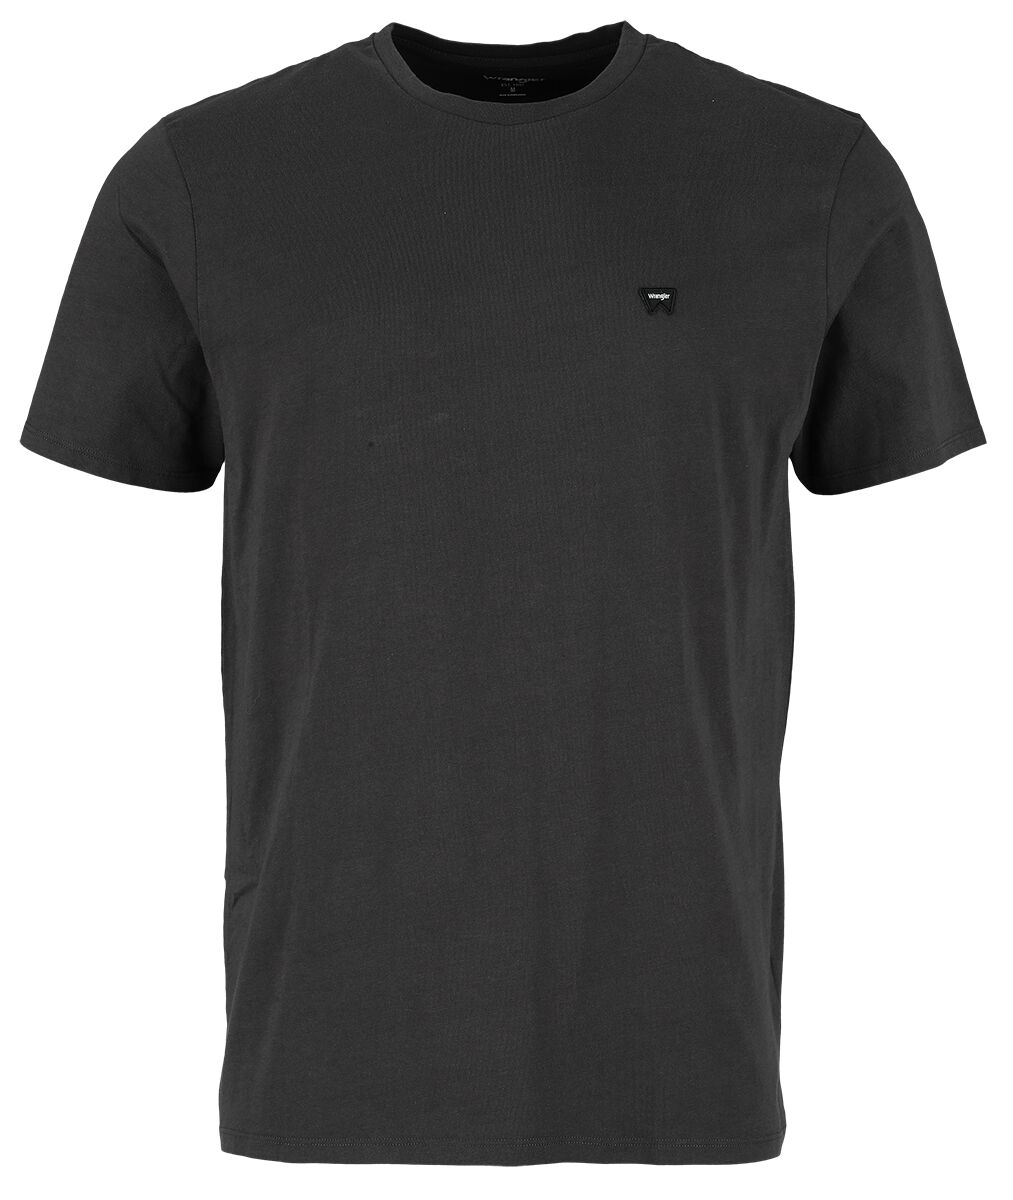 Wrangler Sign Off Tee Faded Black T-Shirt schwarz in XXL